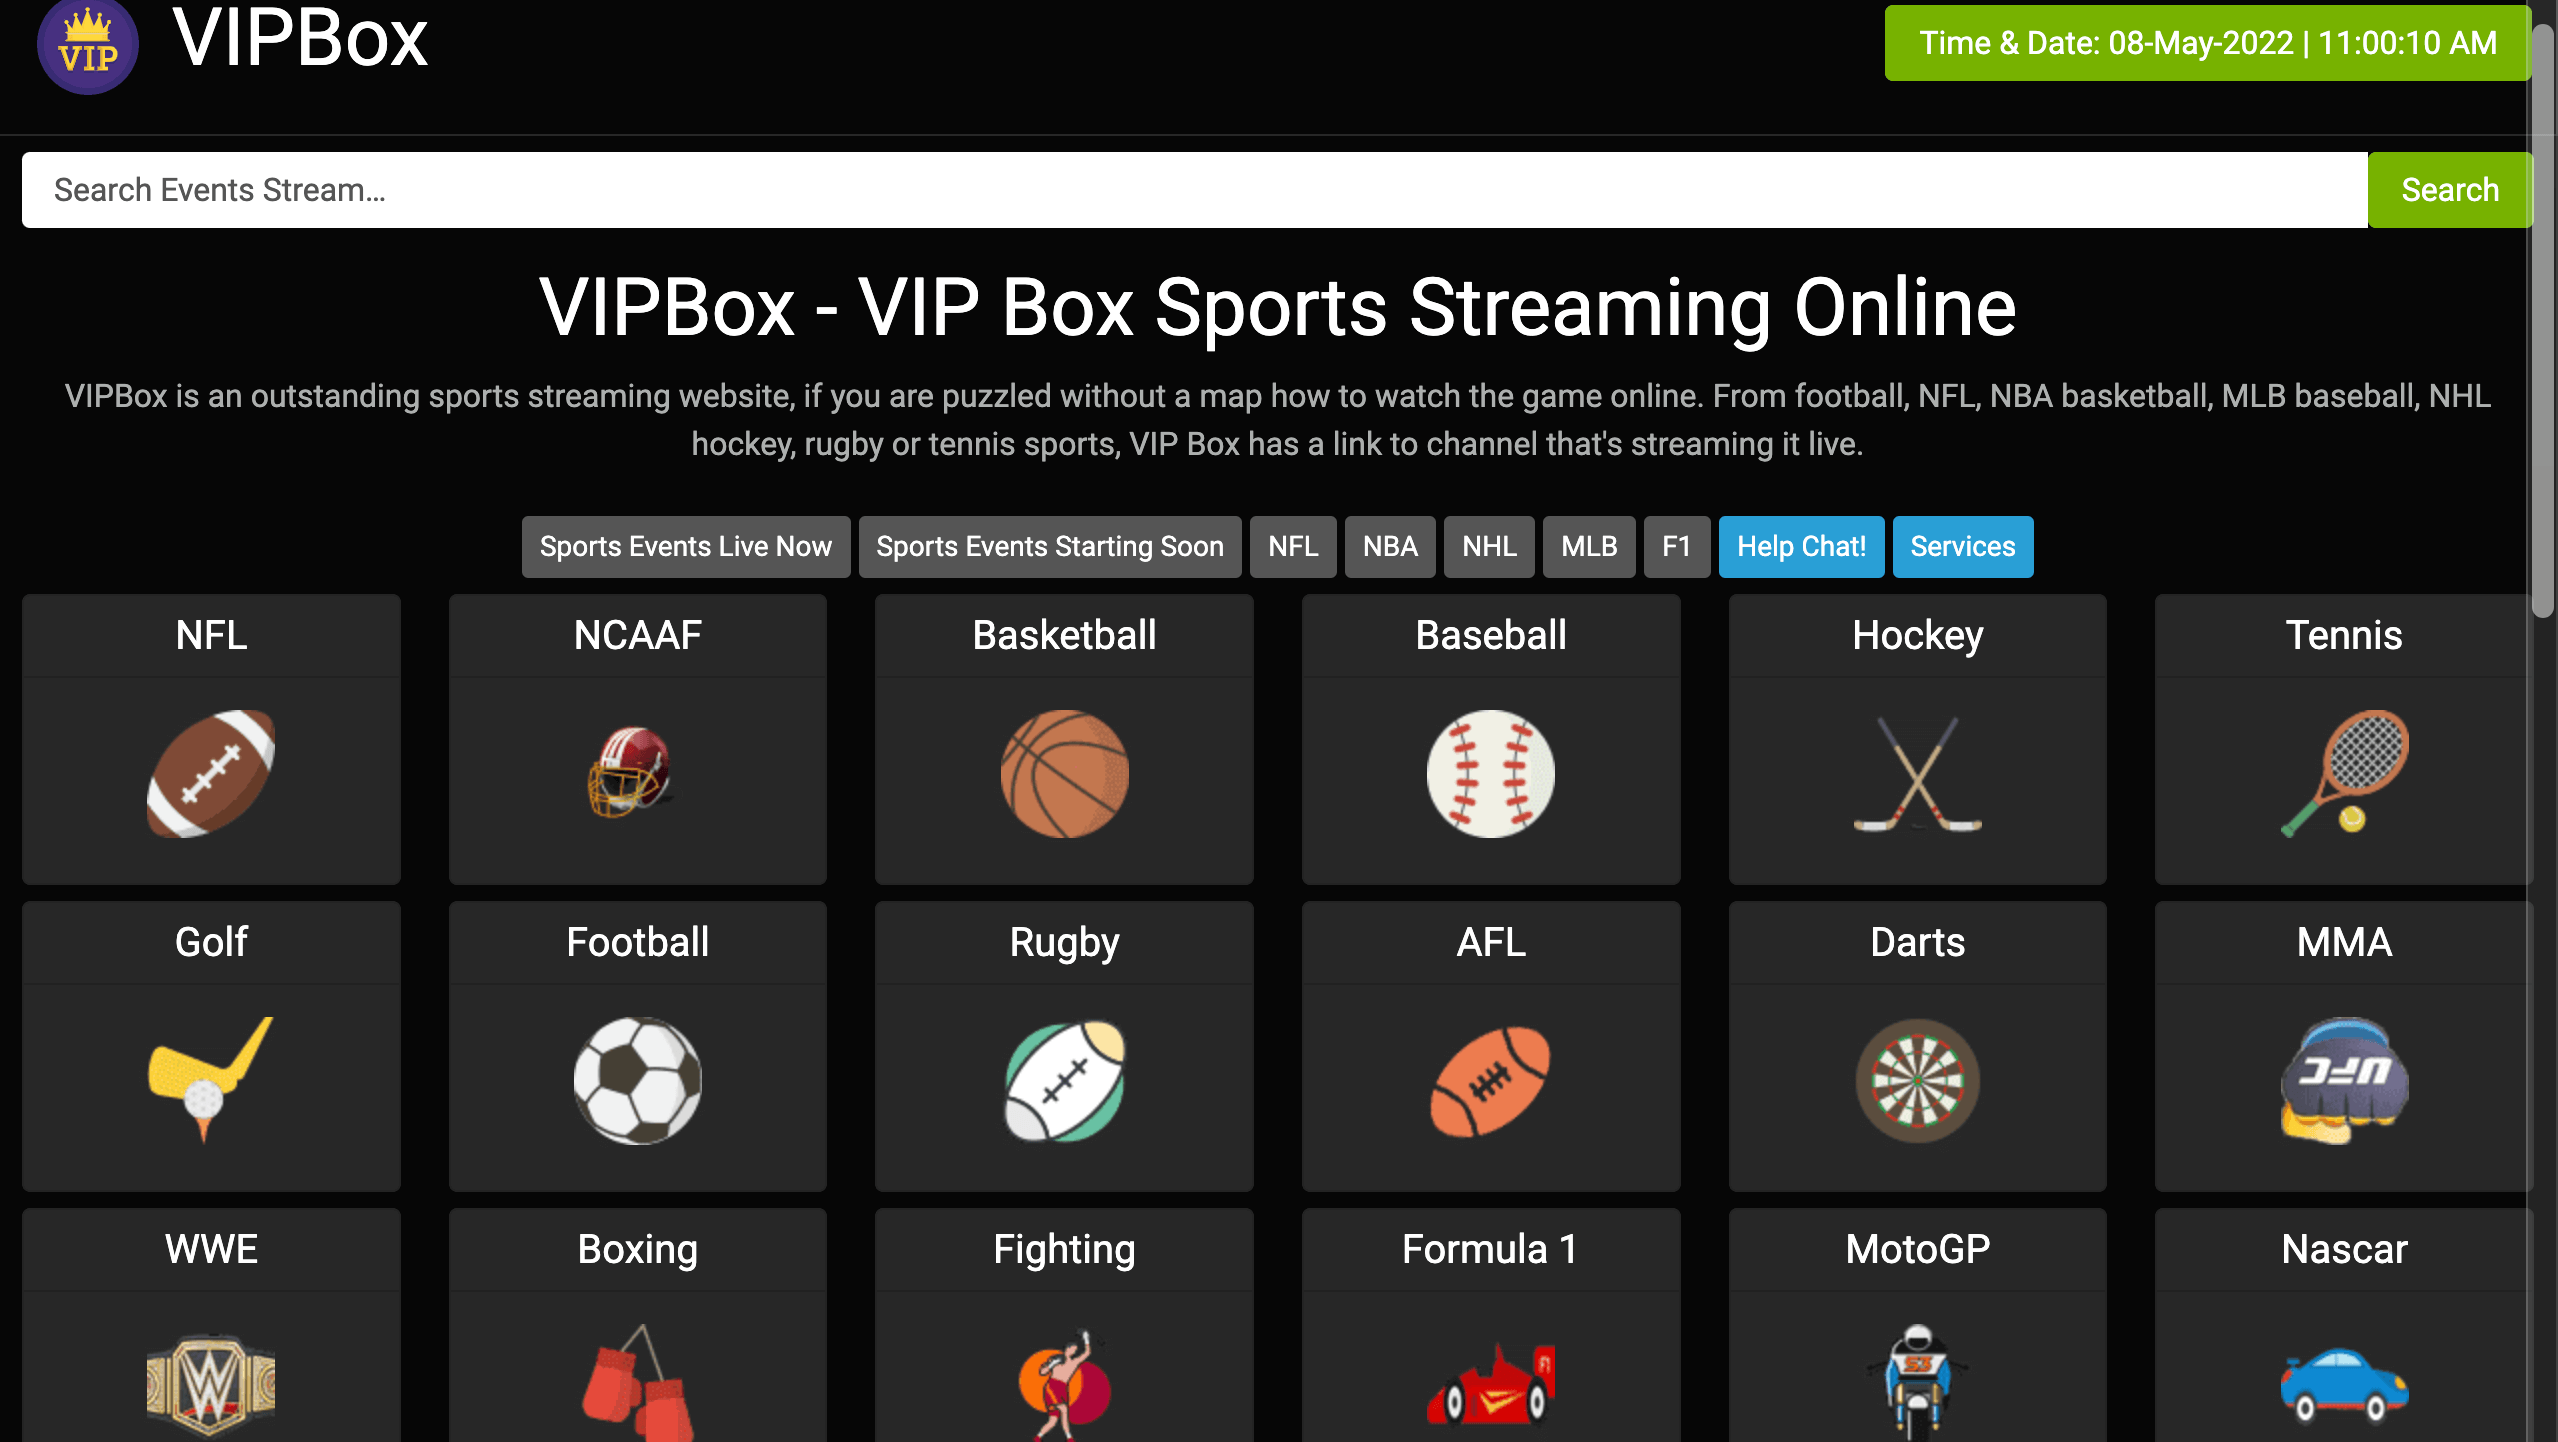 VIPBox - VIP Box Sports Streaming Online